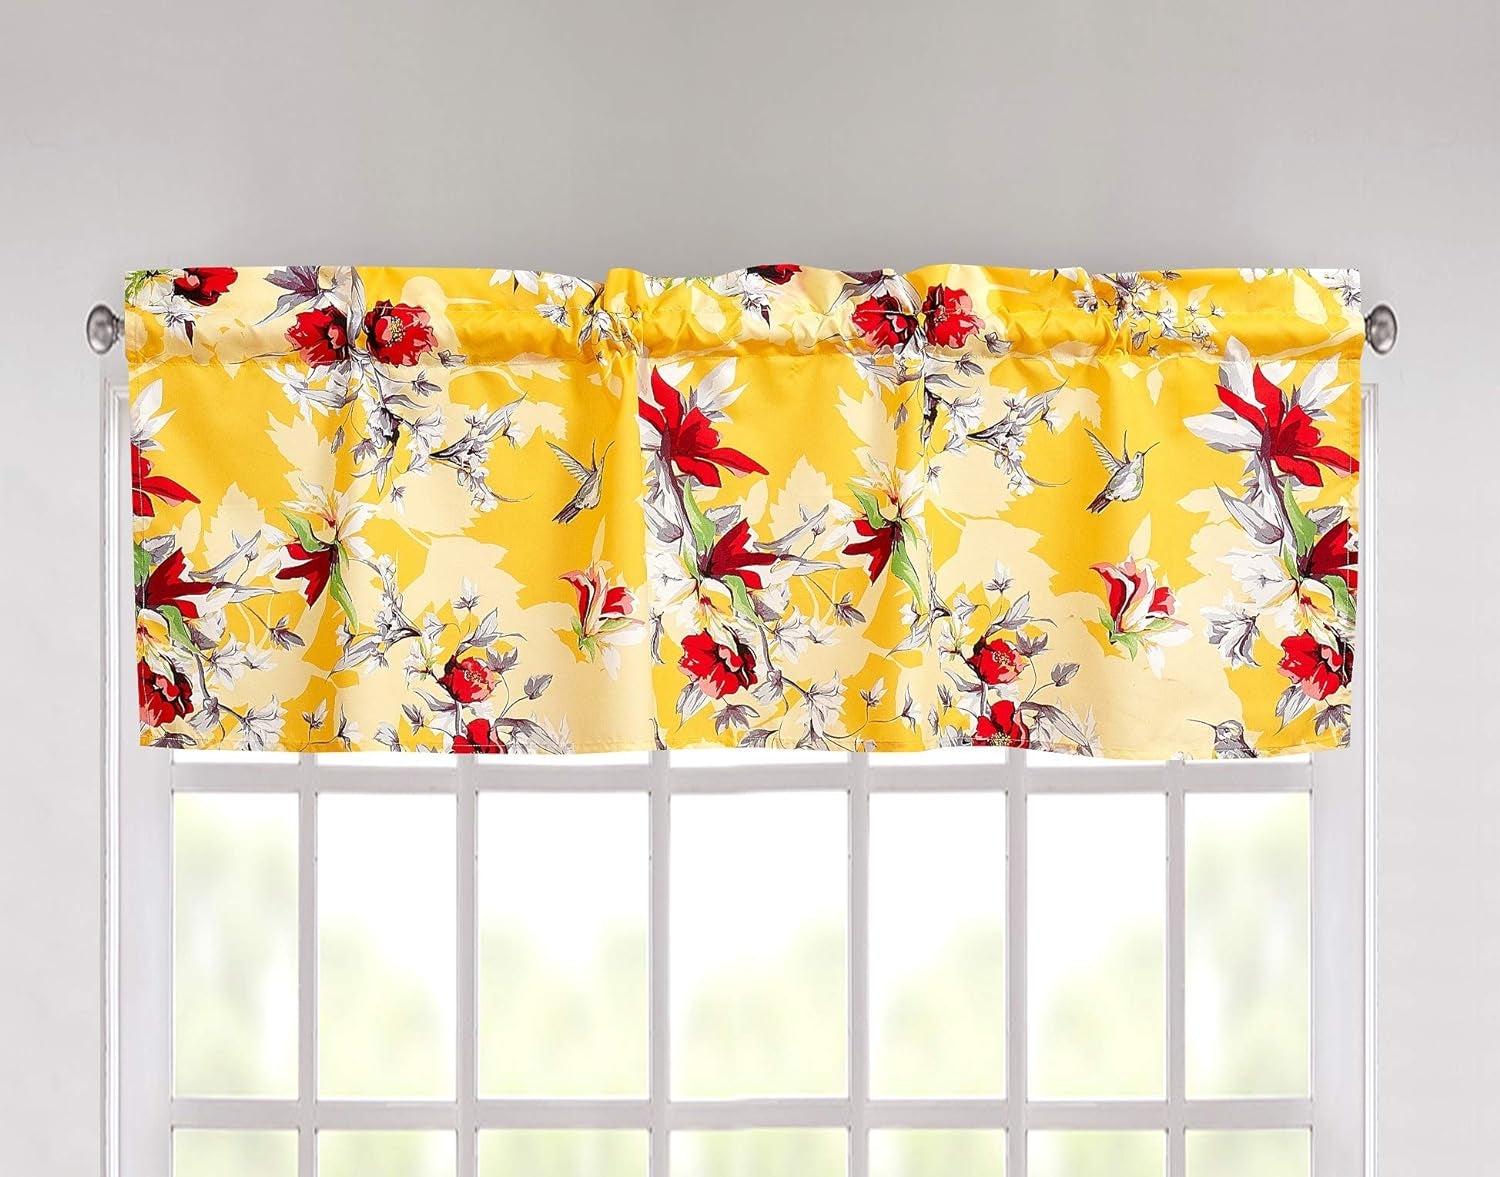 Dada Bedding Radiant Sunshine Yellow Window Curtain Valance - Semi Sheer Natural Light Filtering Tailored Farmhouse Floral Hummingbirds - Bright Vibrant Red Flowers Kitchen Decor - 18" X 52"